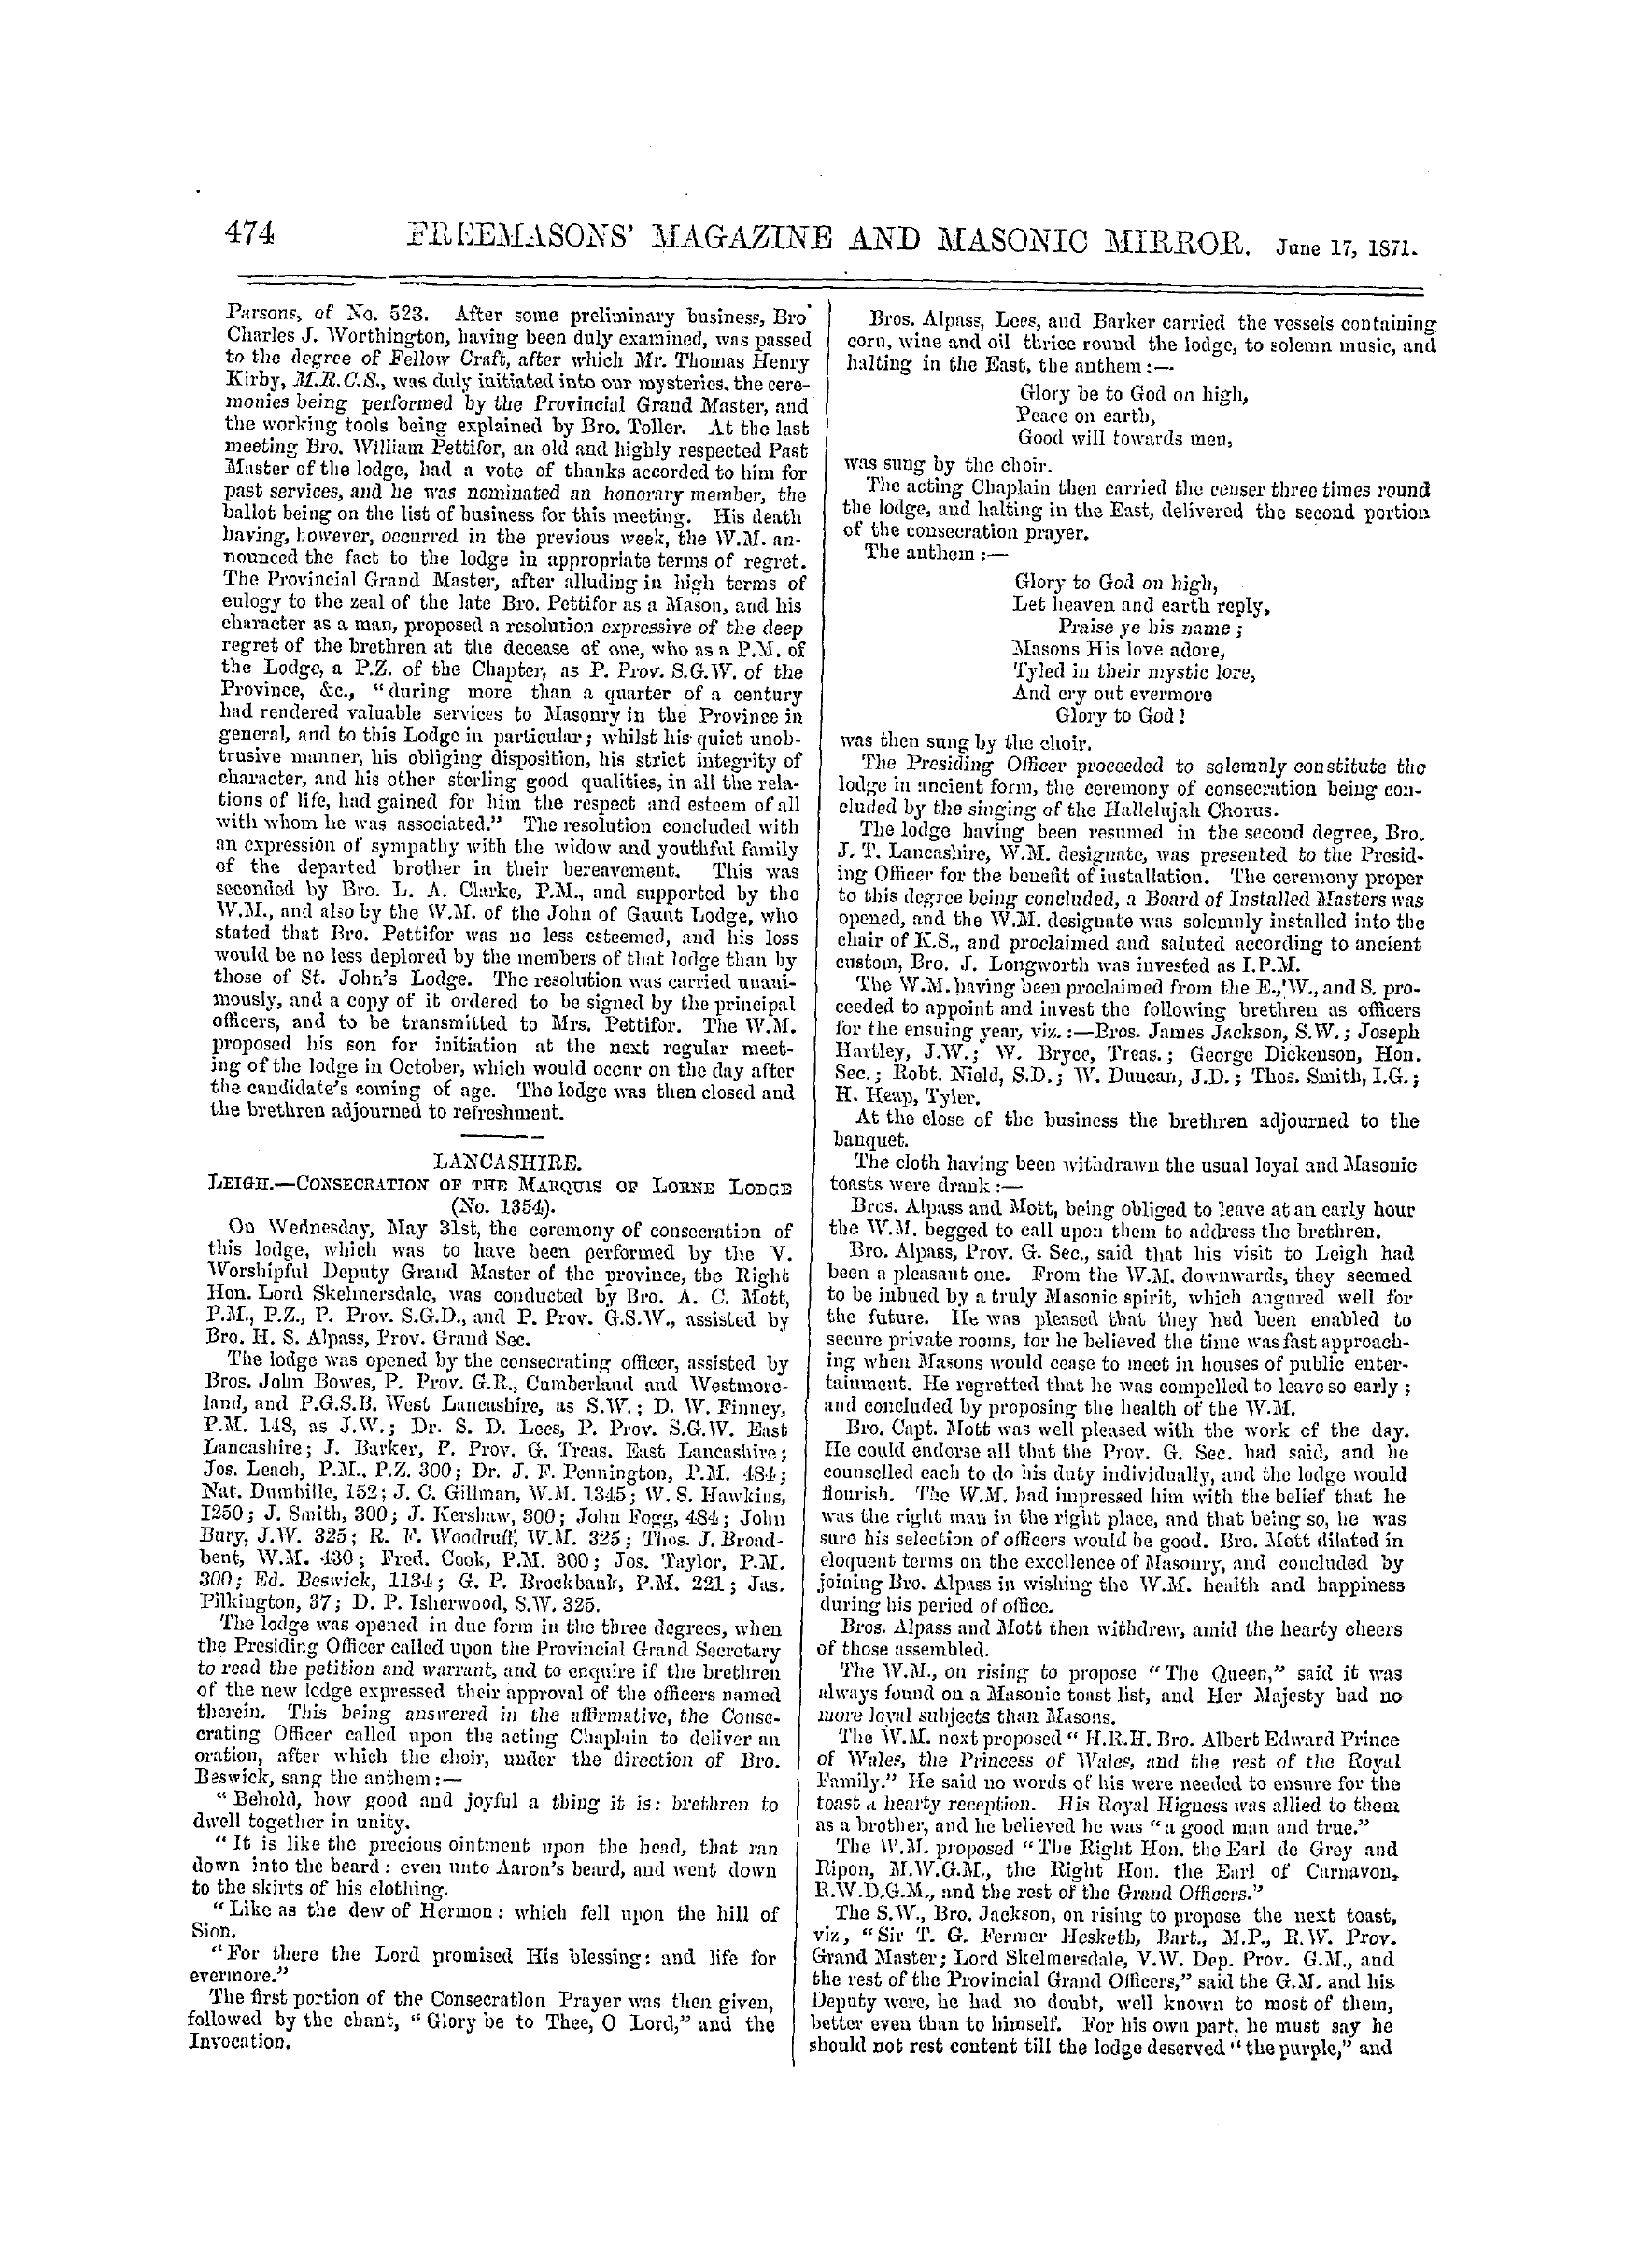 The Freemasons' Monthly Magazine: 1871-06-17 - Provincial.